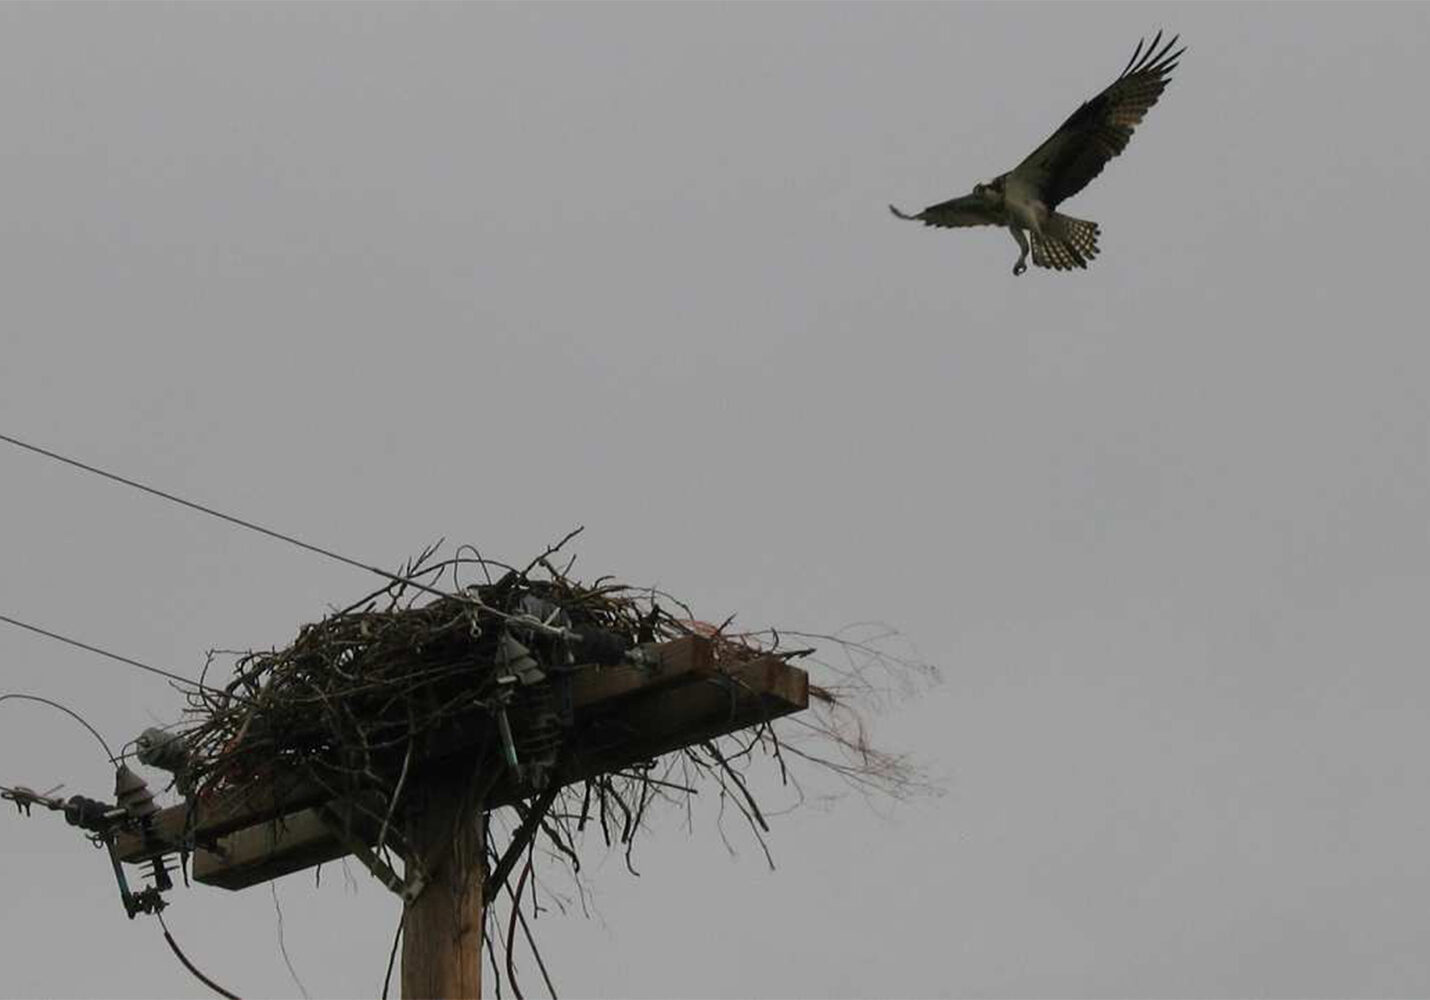 An Osprey flies towards its nest built on the top of a utility pole